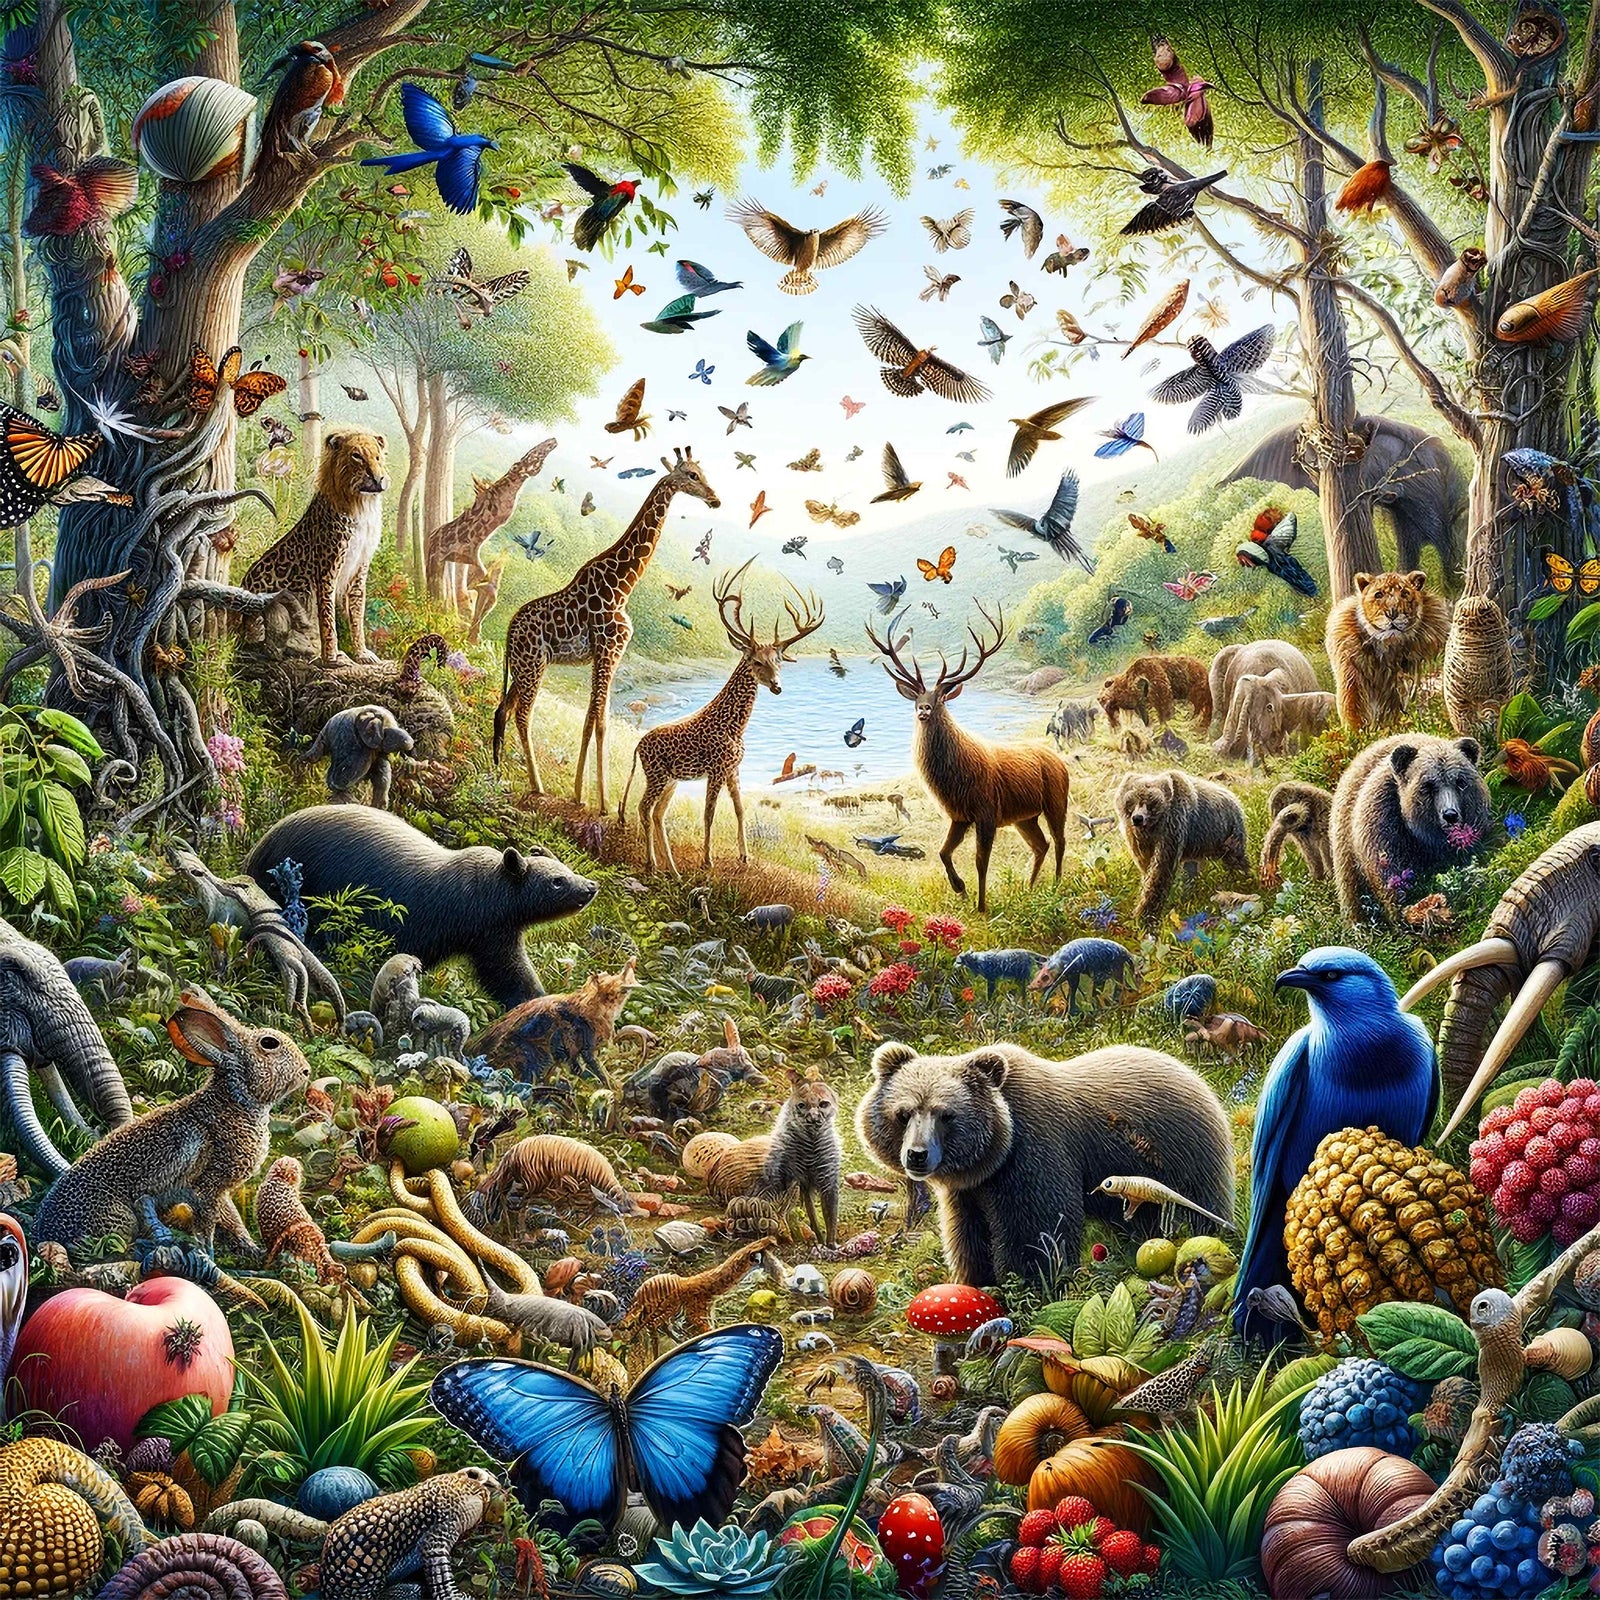 Wildlife and Biodiversity